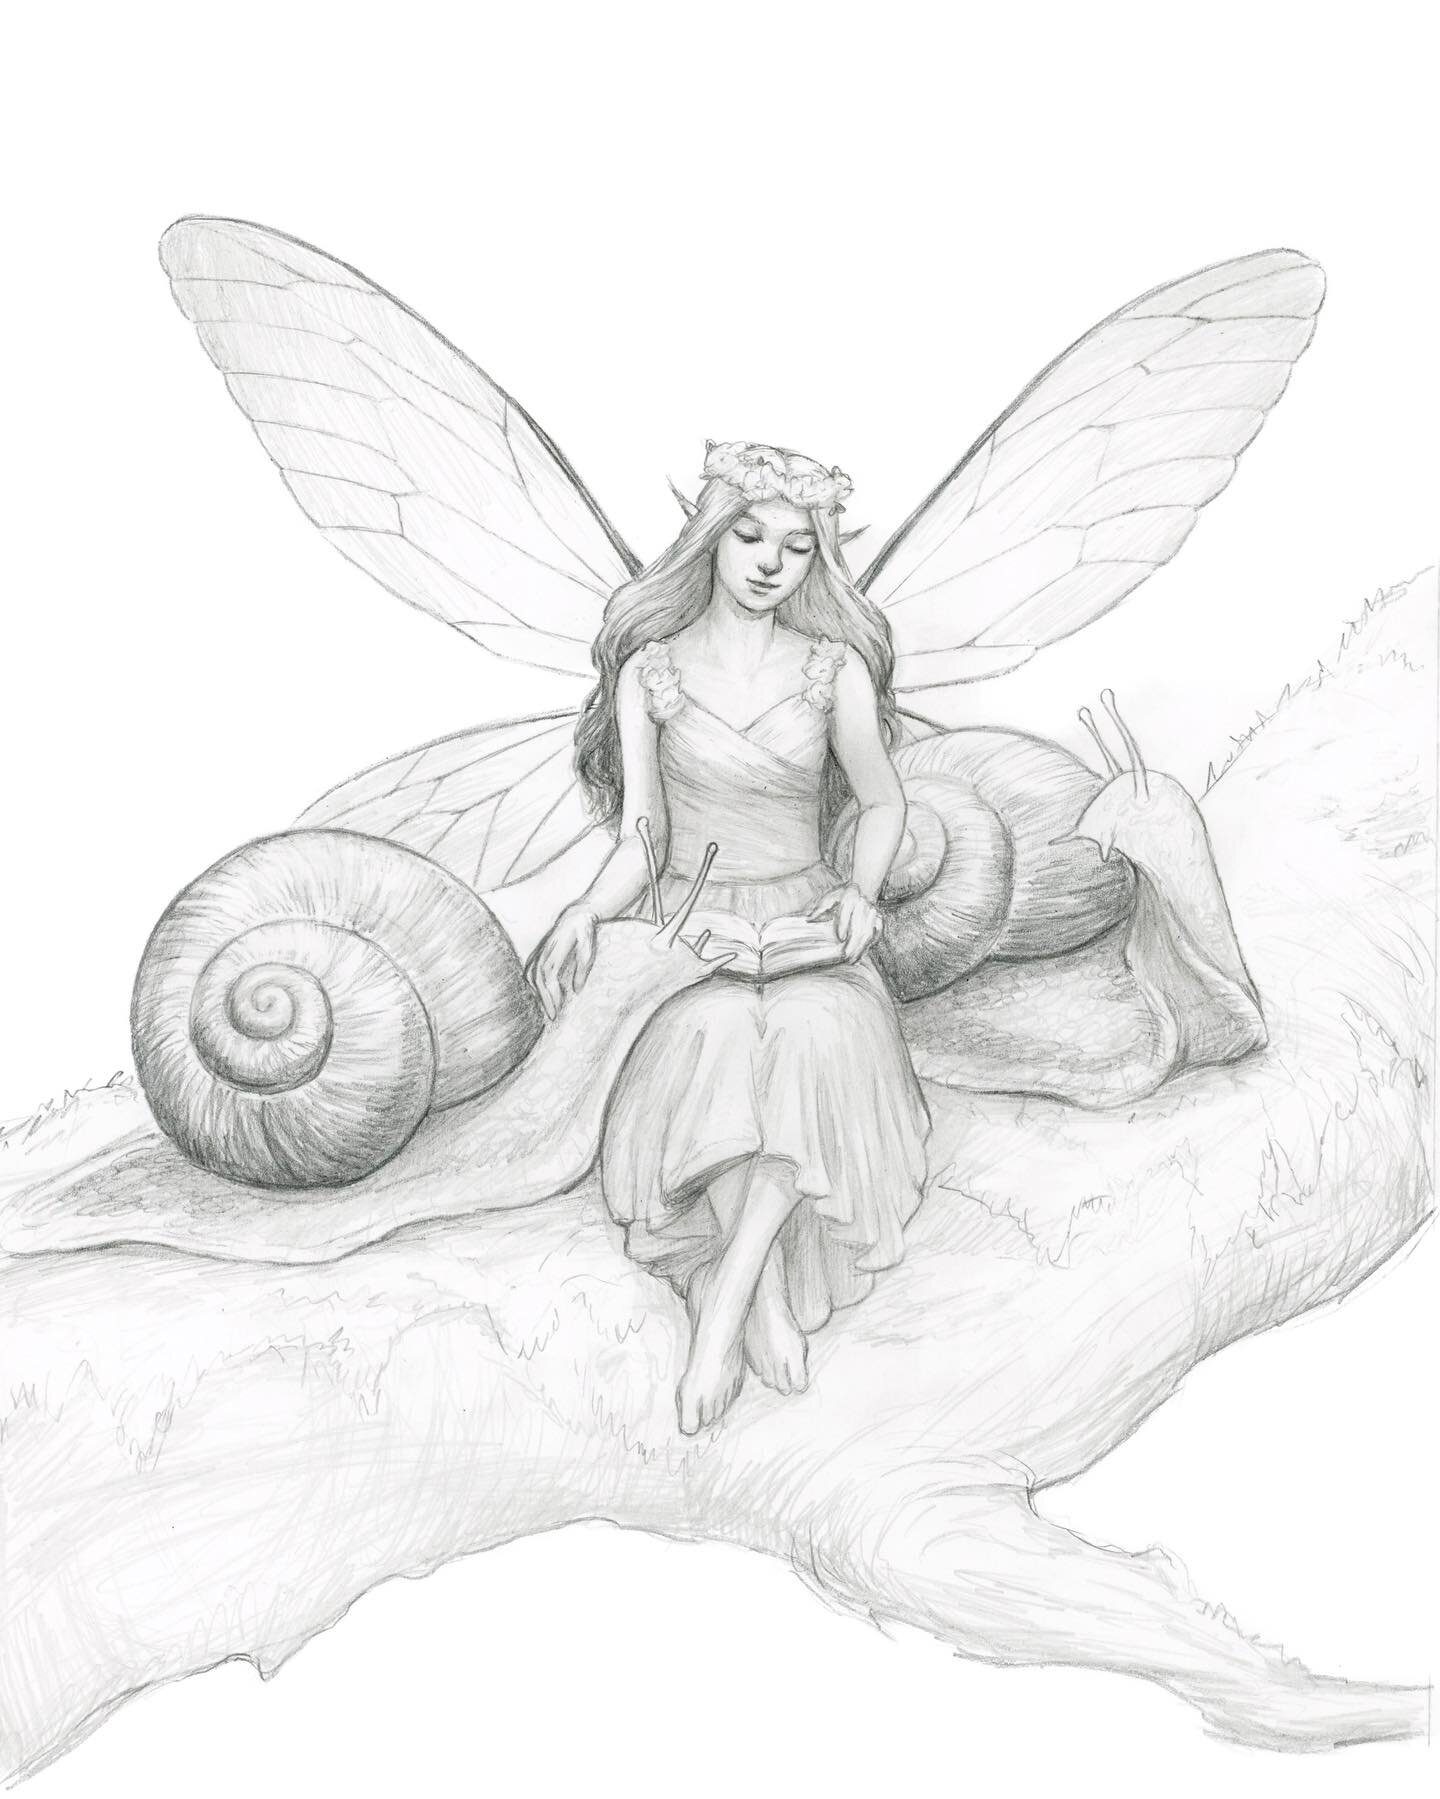 My fairy and snail drawing is ready for a home 💖
#fairytaleart #fairyaesthetic #pencildrawing #fantasyart